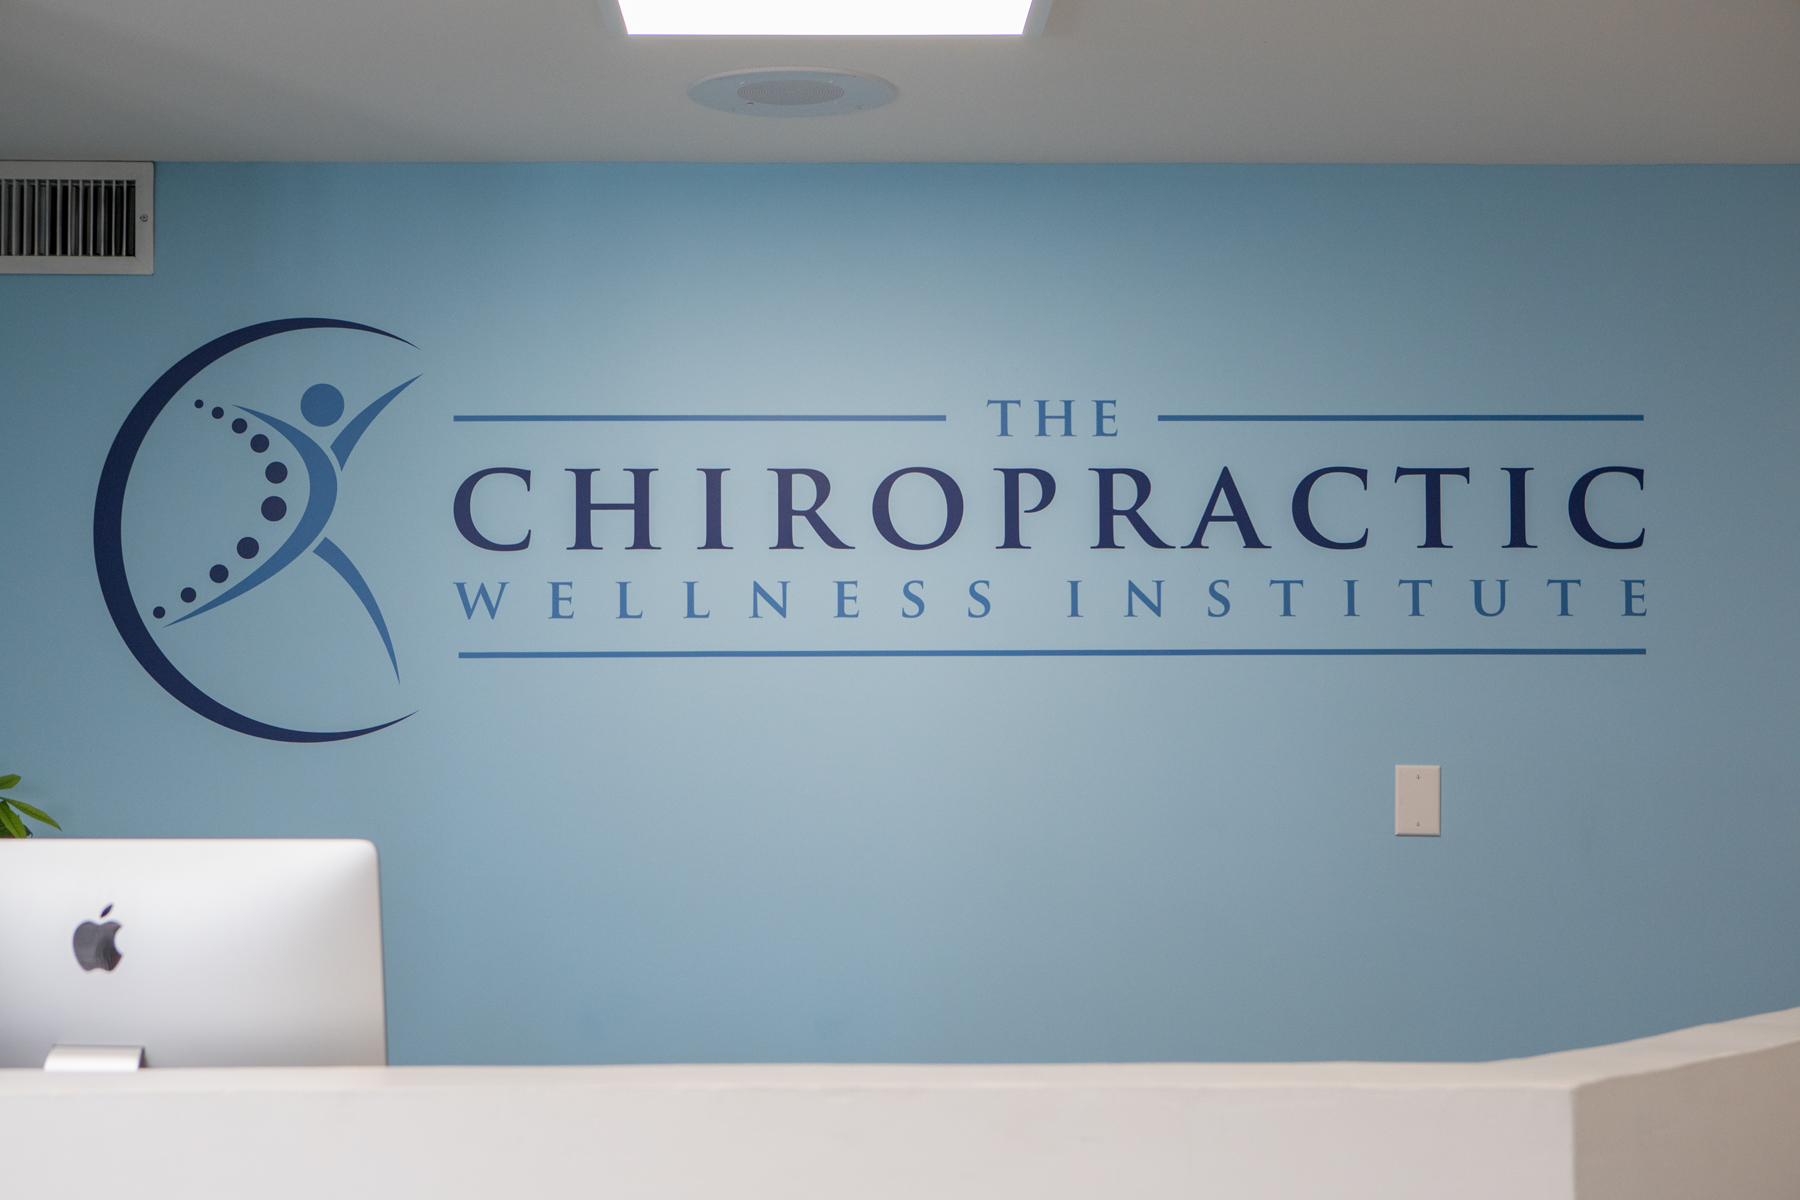 The Chiropractic Wellness Institute